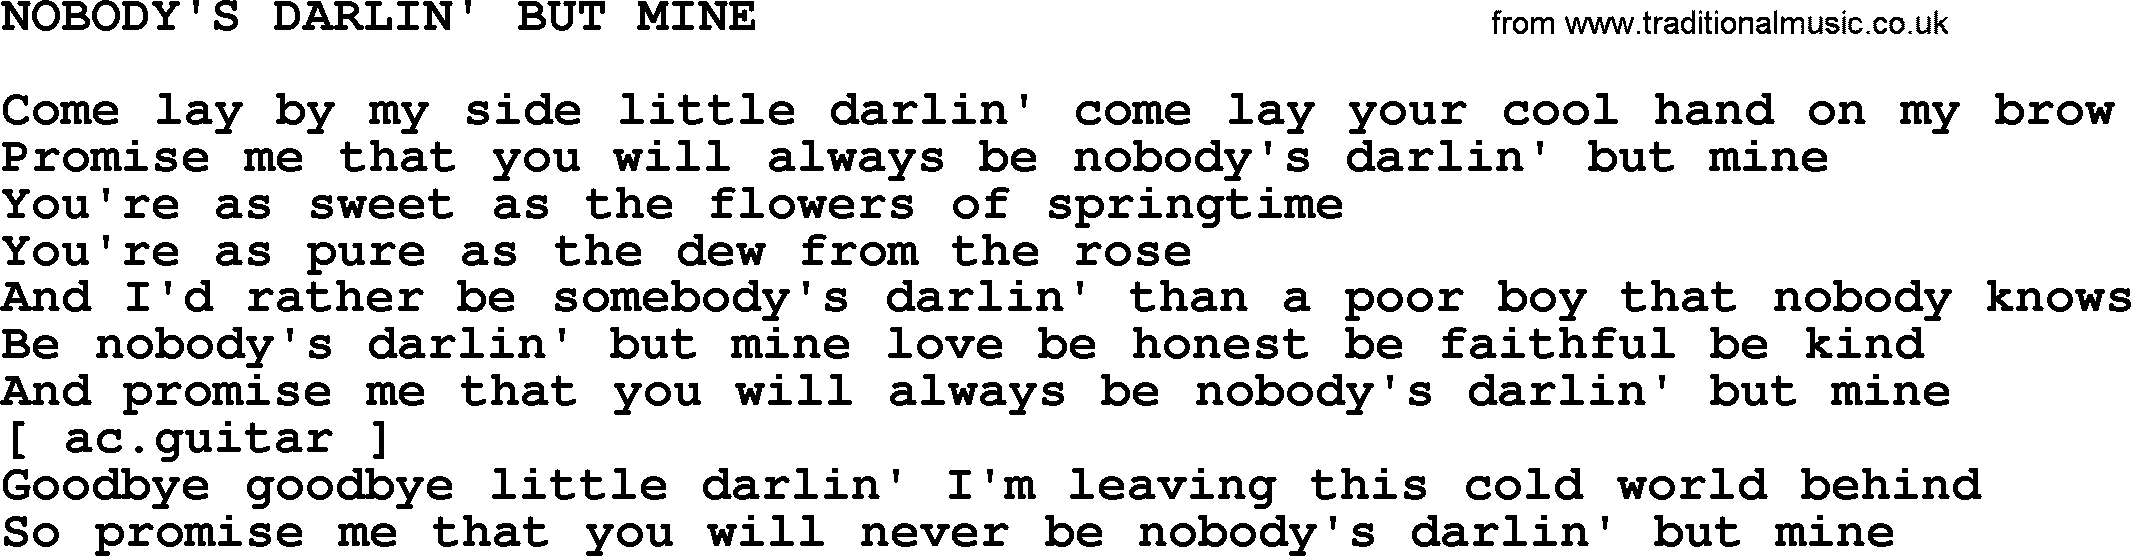 Merle Haggard song: Nobody's Darlin' But Mine, lyrics.